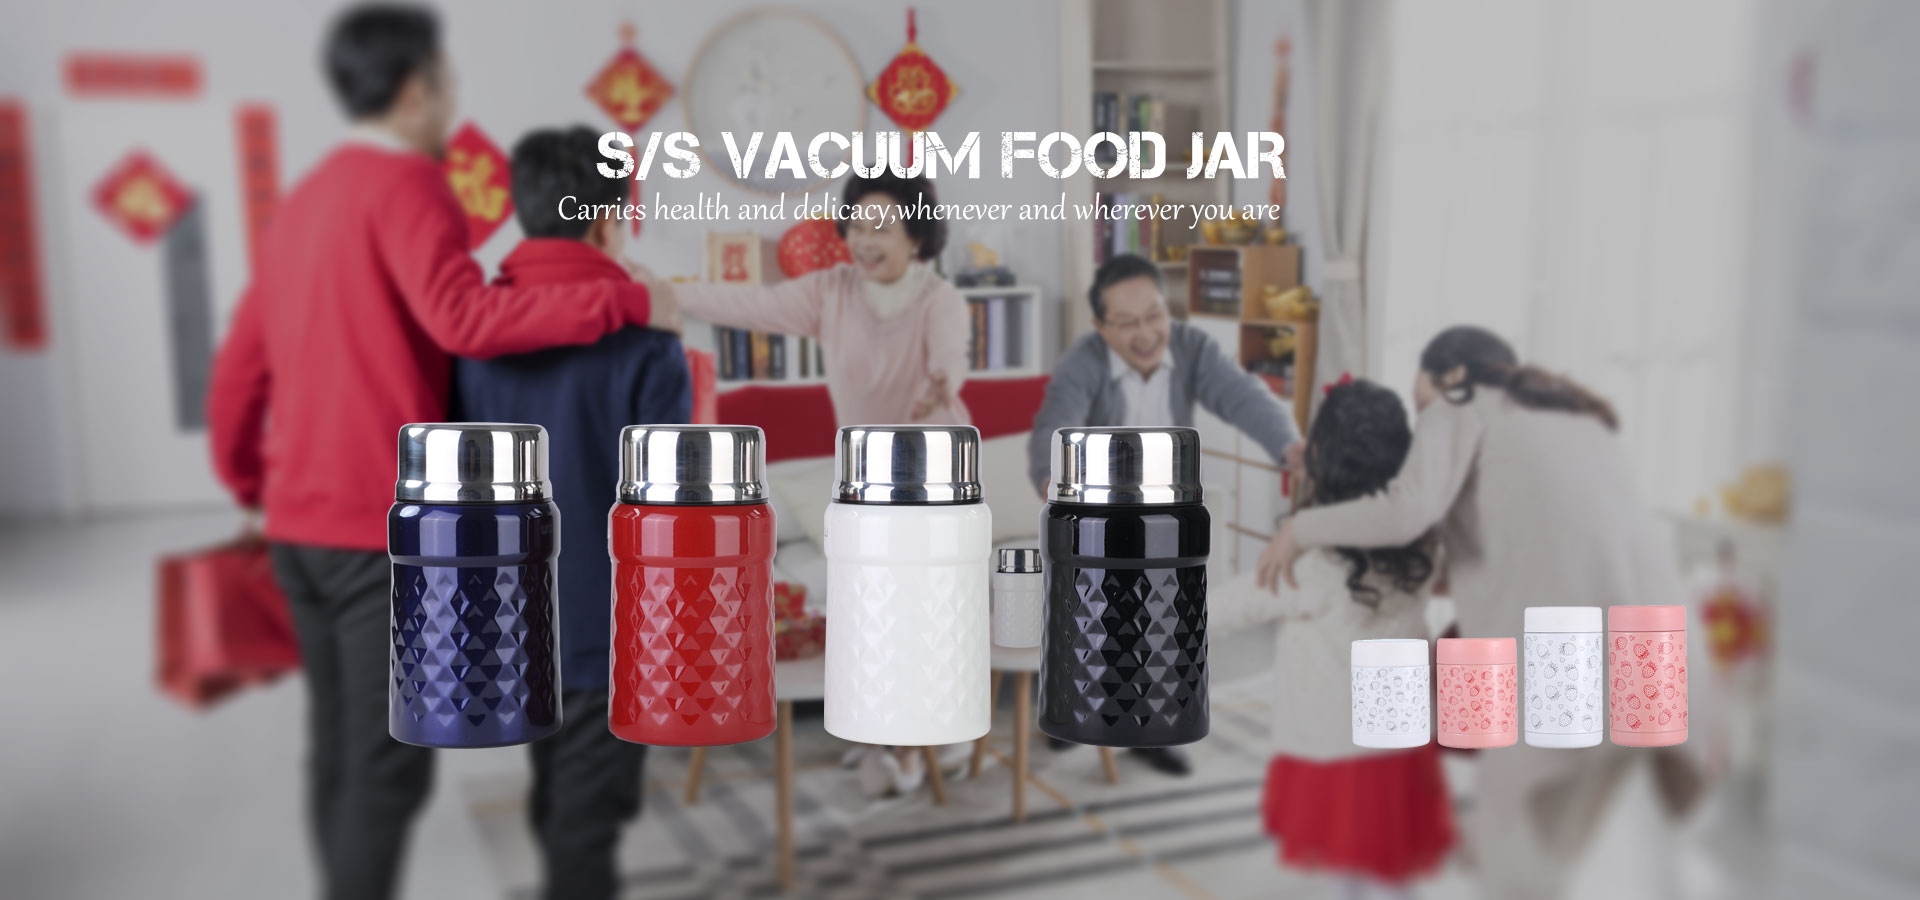 S/S VACUUM FOOD JAR